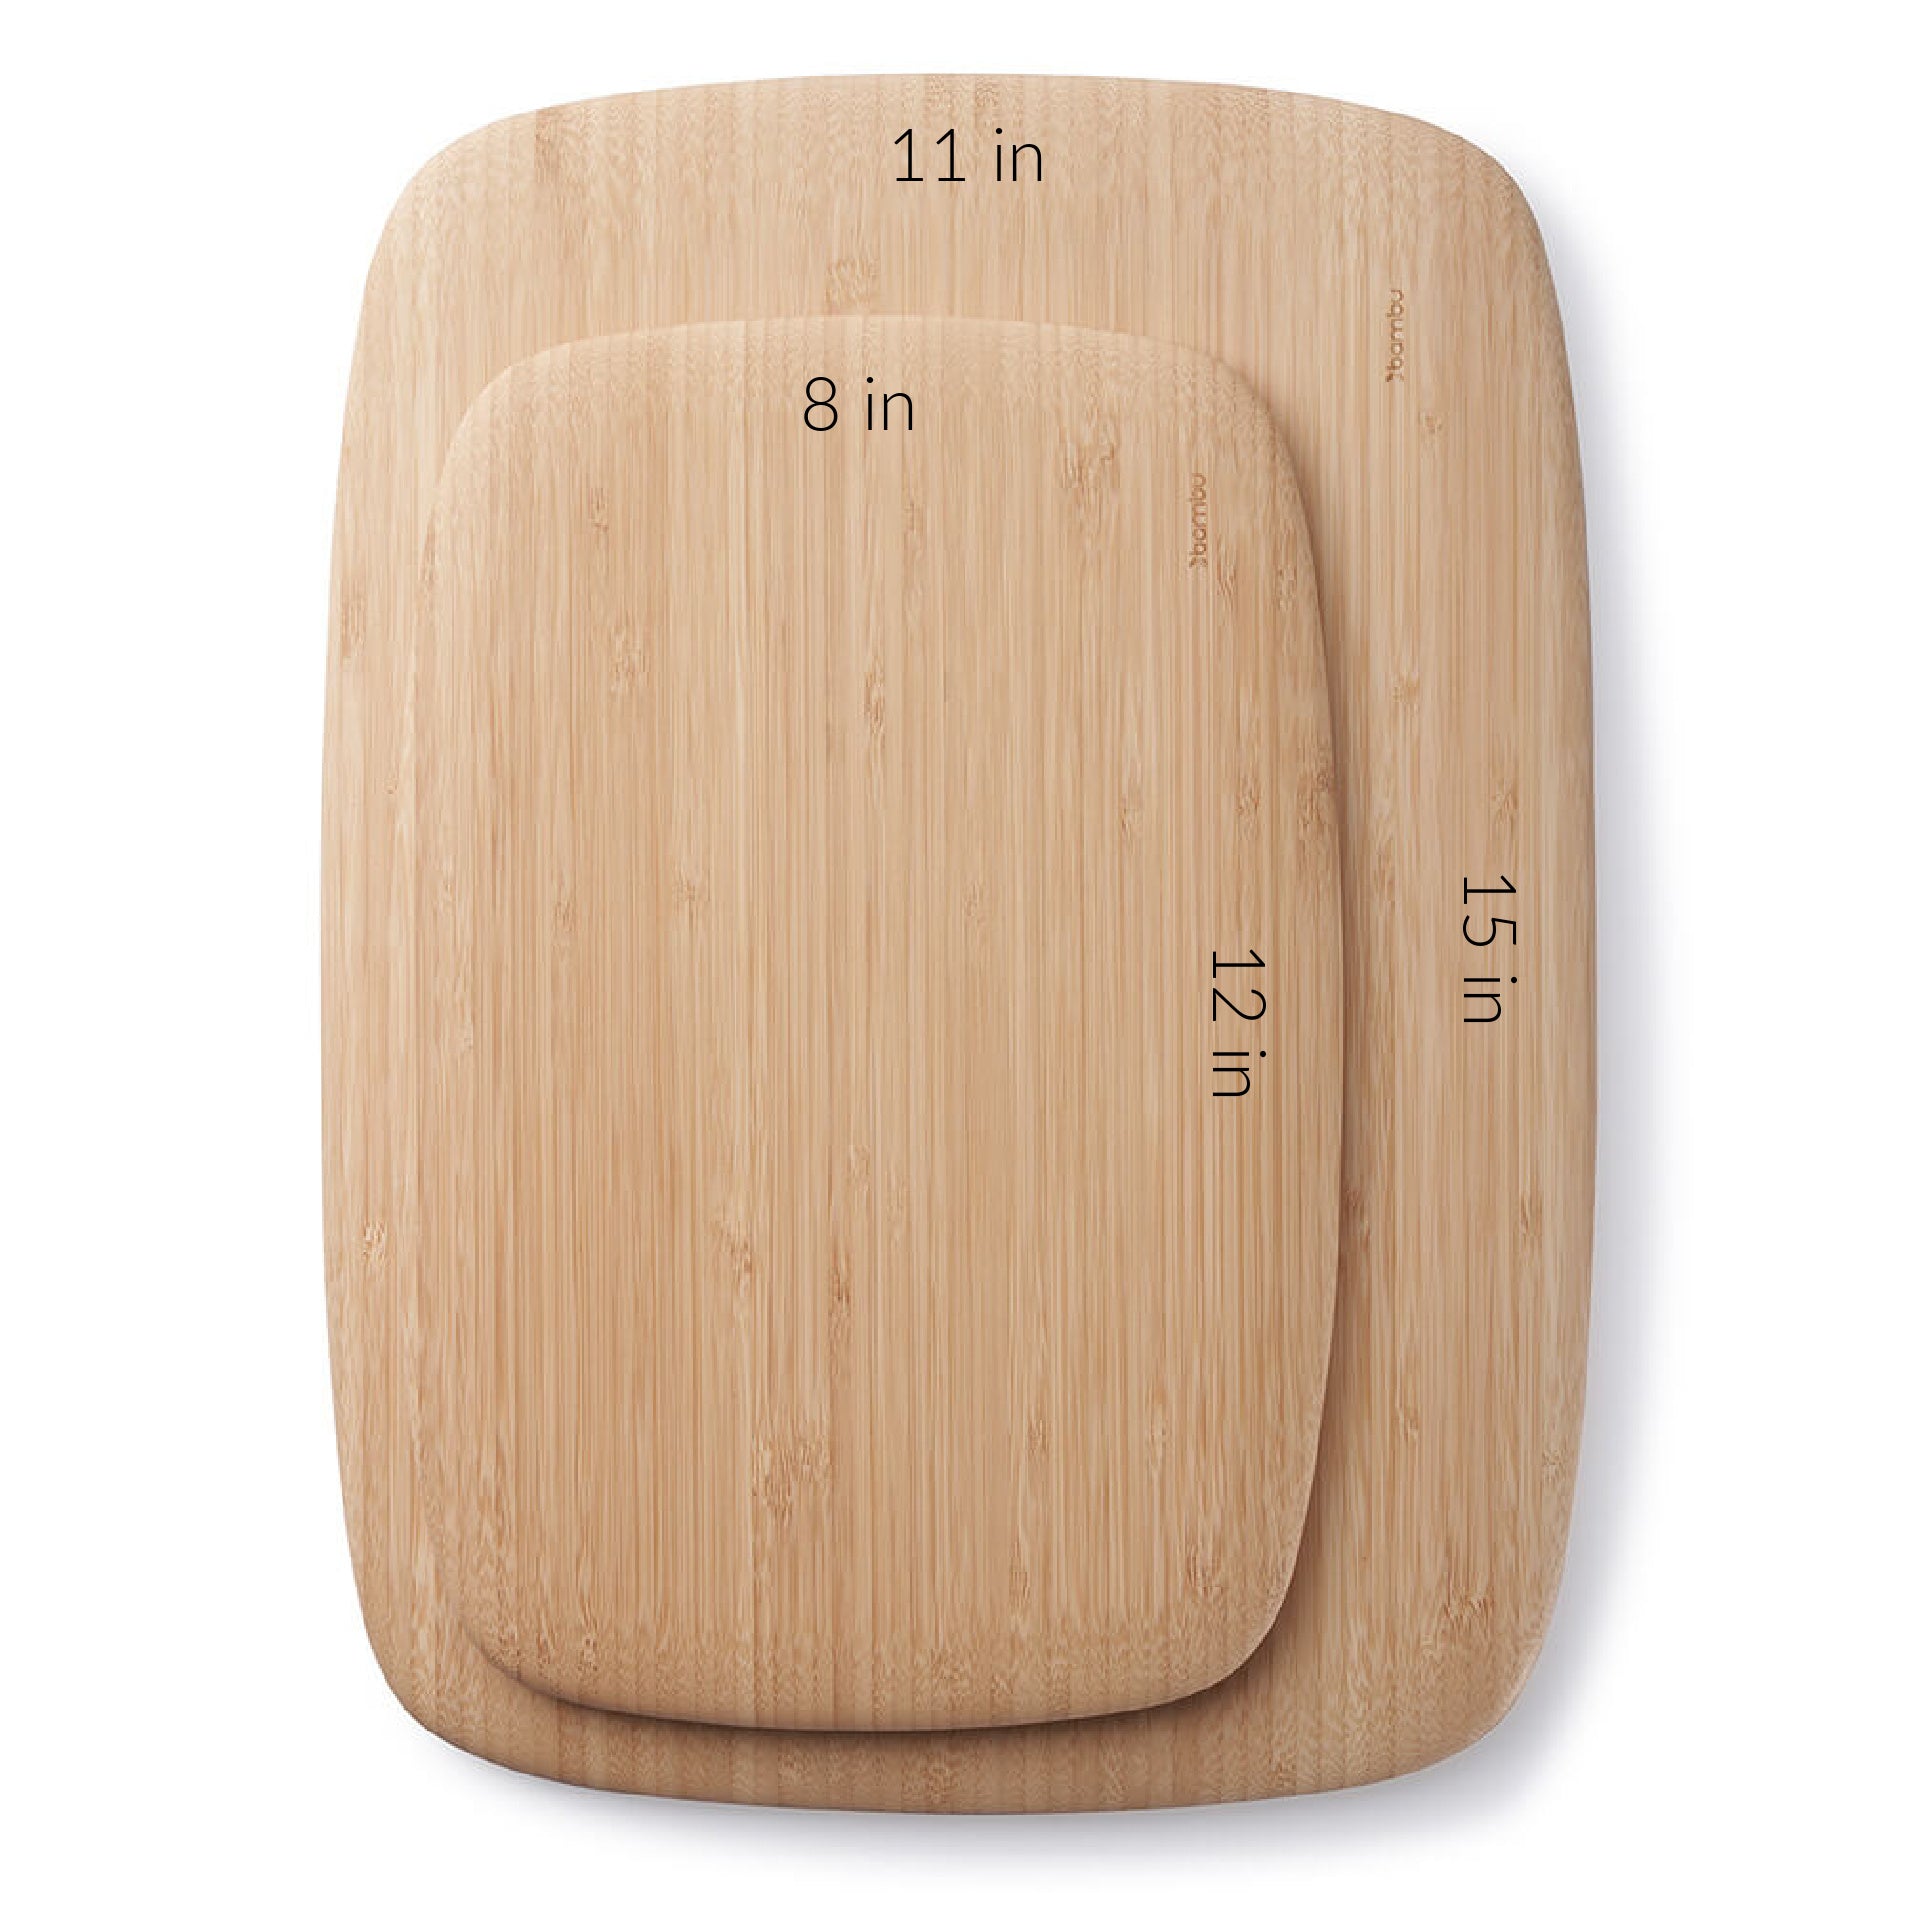 Small (Bar Size) Genuine Bamboo Cutting Board